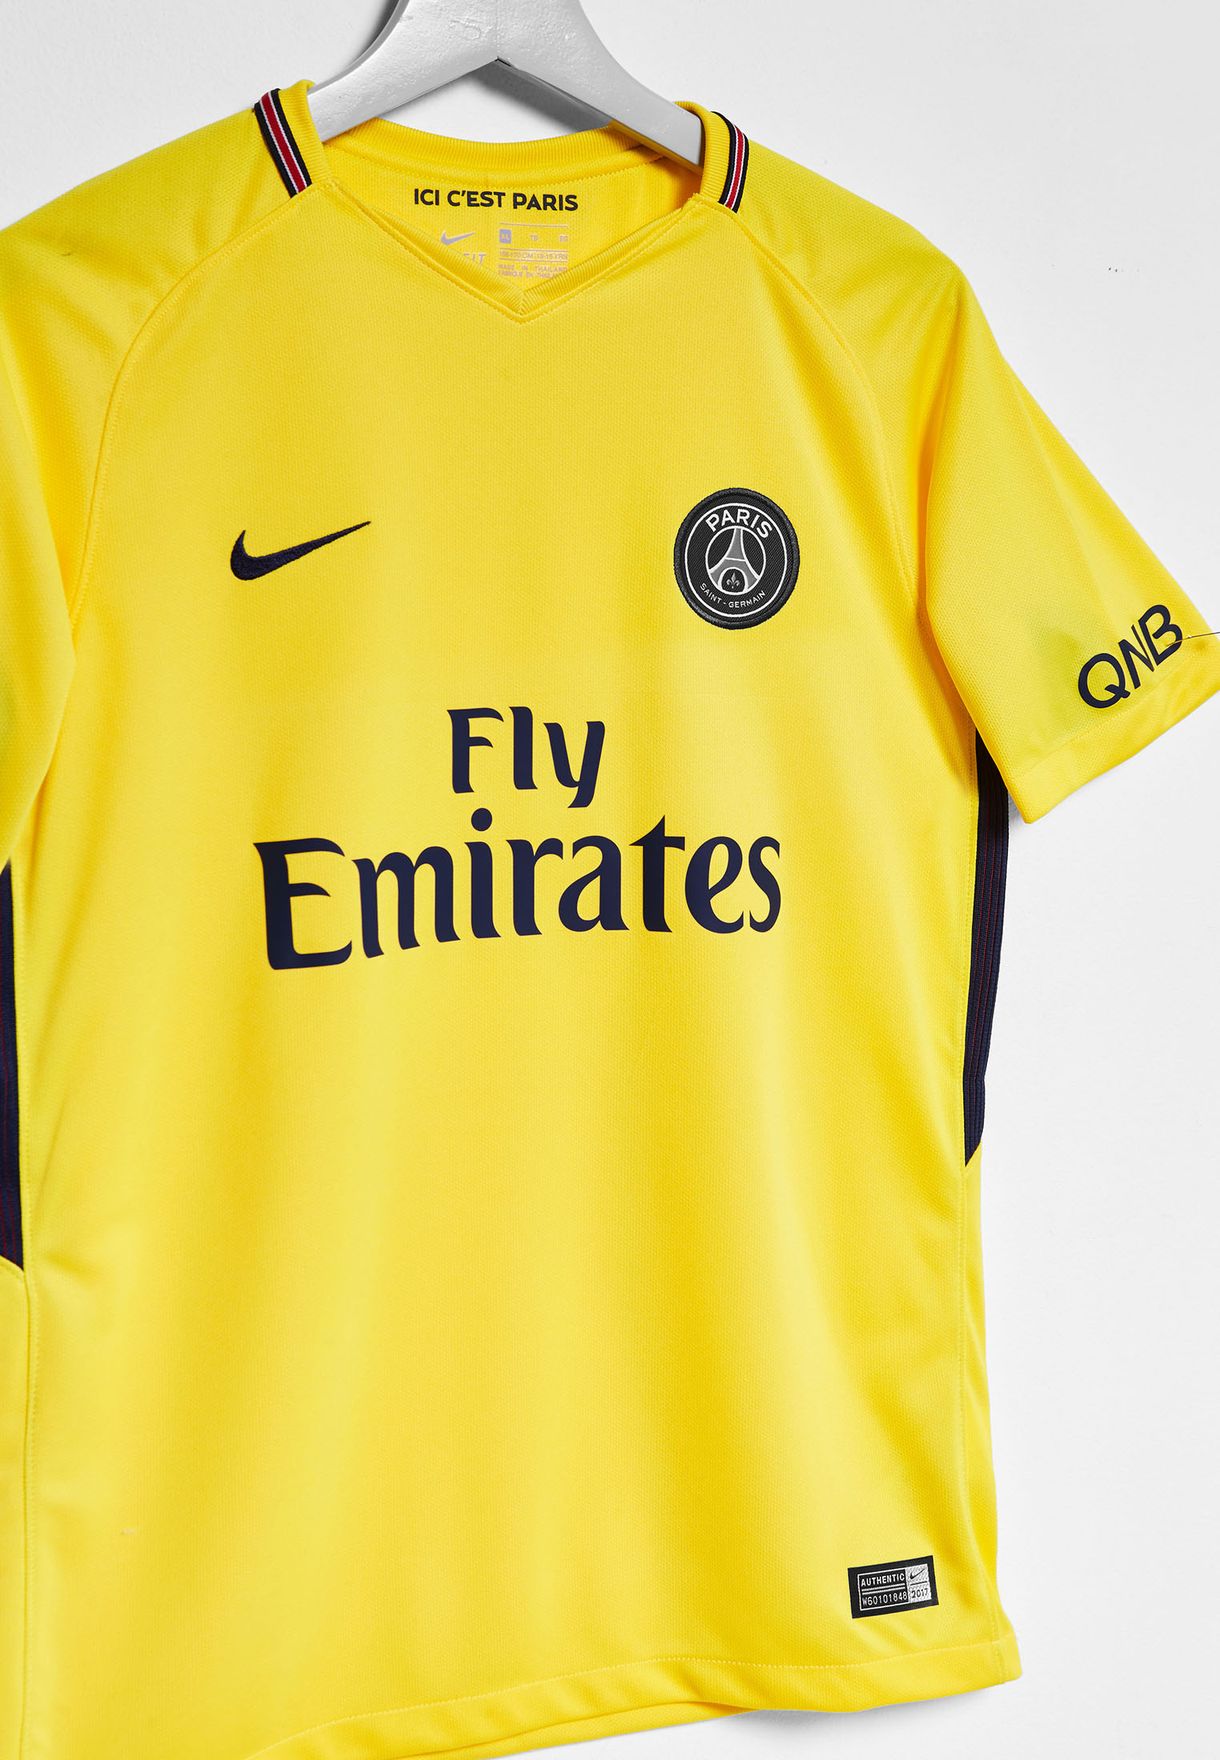 Buy Nike yellow Youth PSG 17/18 Away Jersey for Kids in Dubai, Abu Dhabi